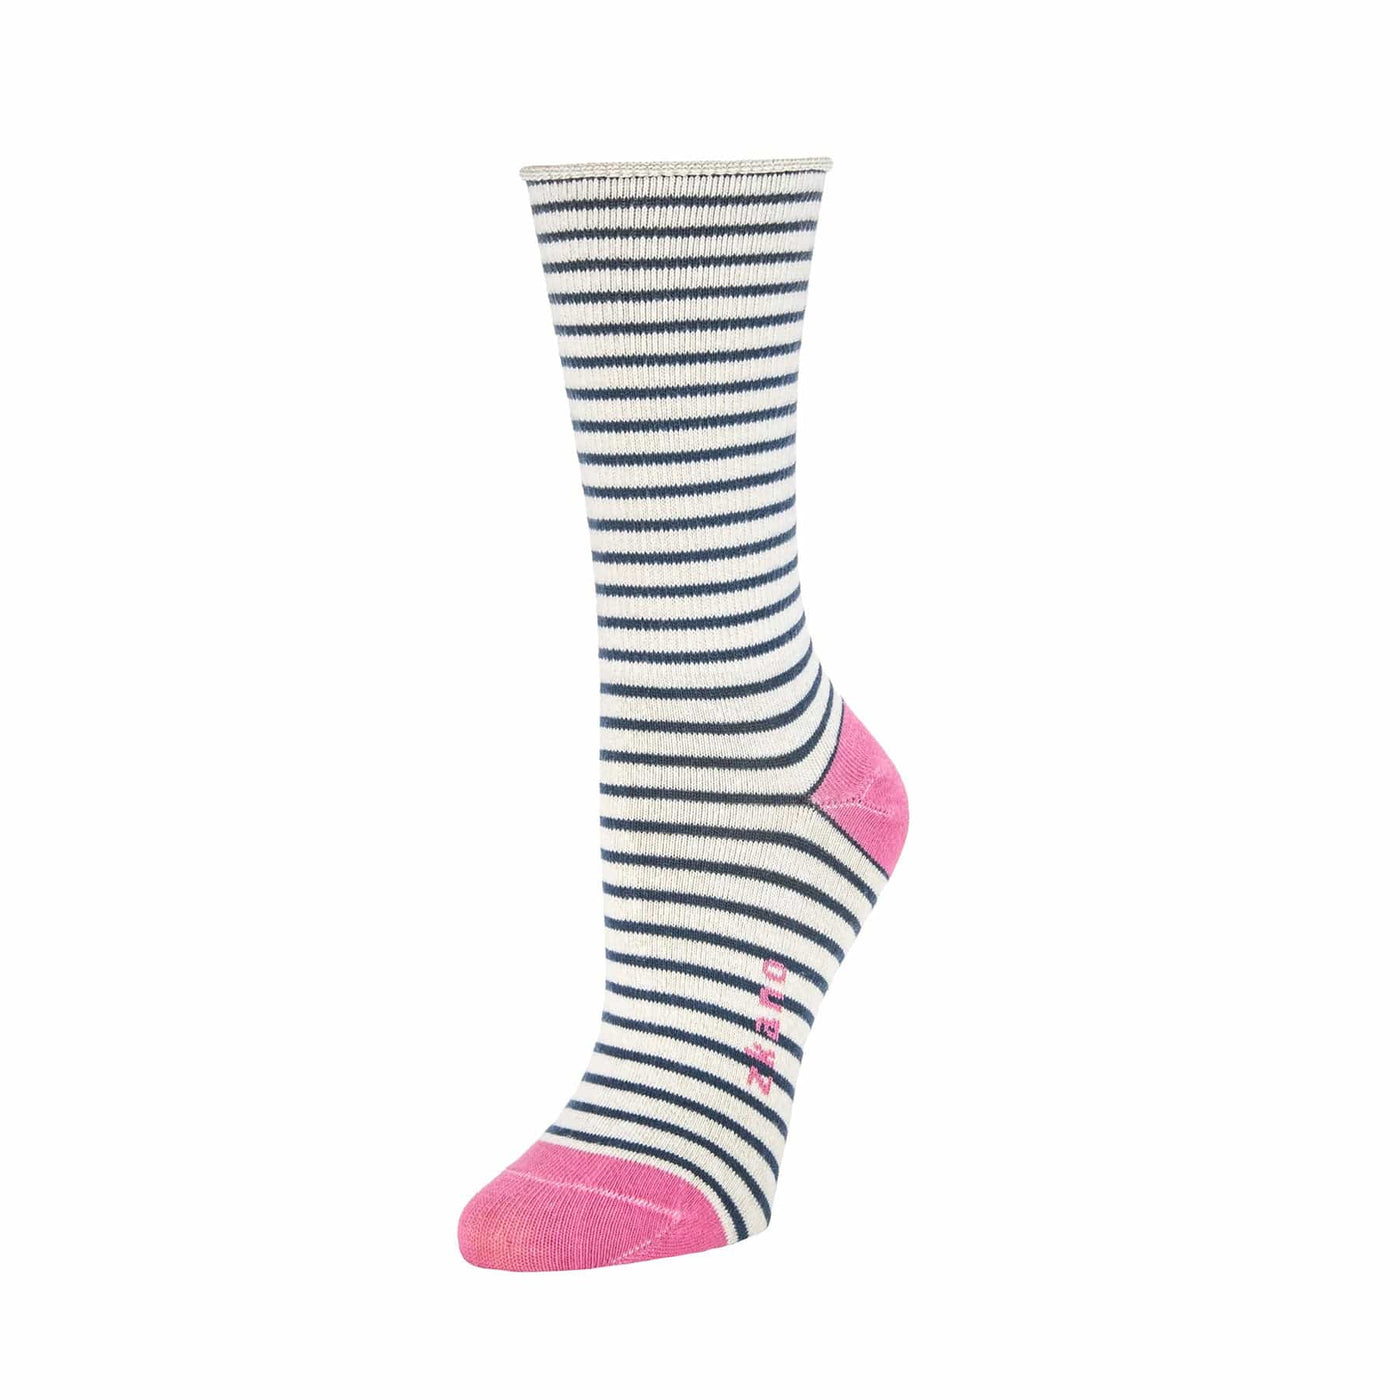 Zkano Roll Top Medium Rose - Roll Top Organic Cotton Crew Socks - Wheat organic-socks-made-in-usa